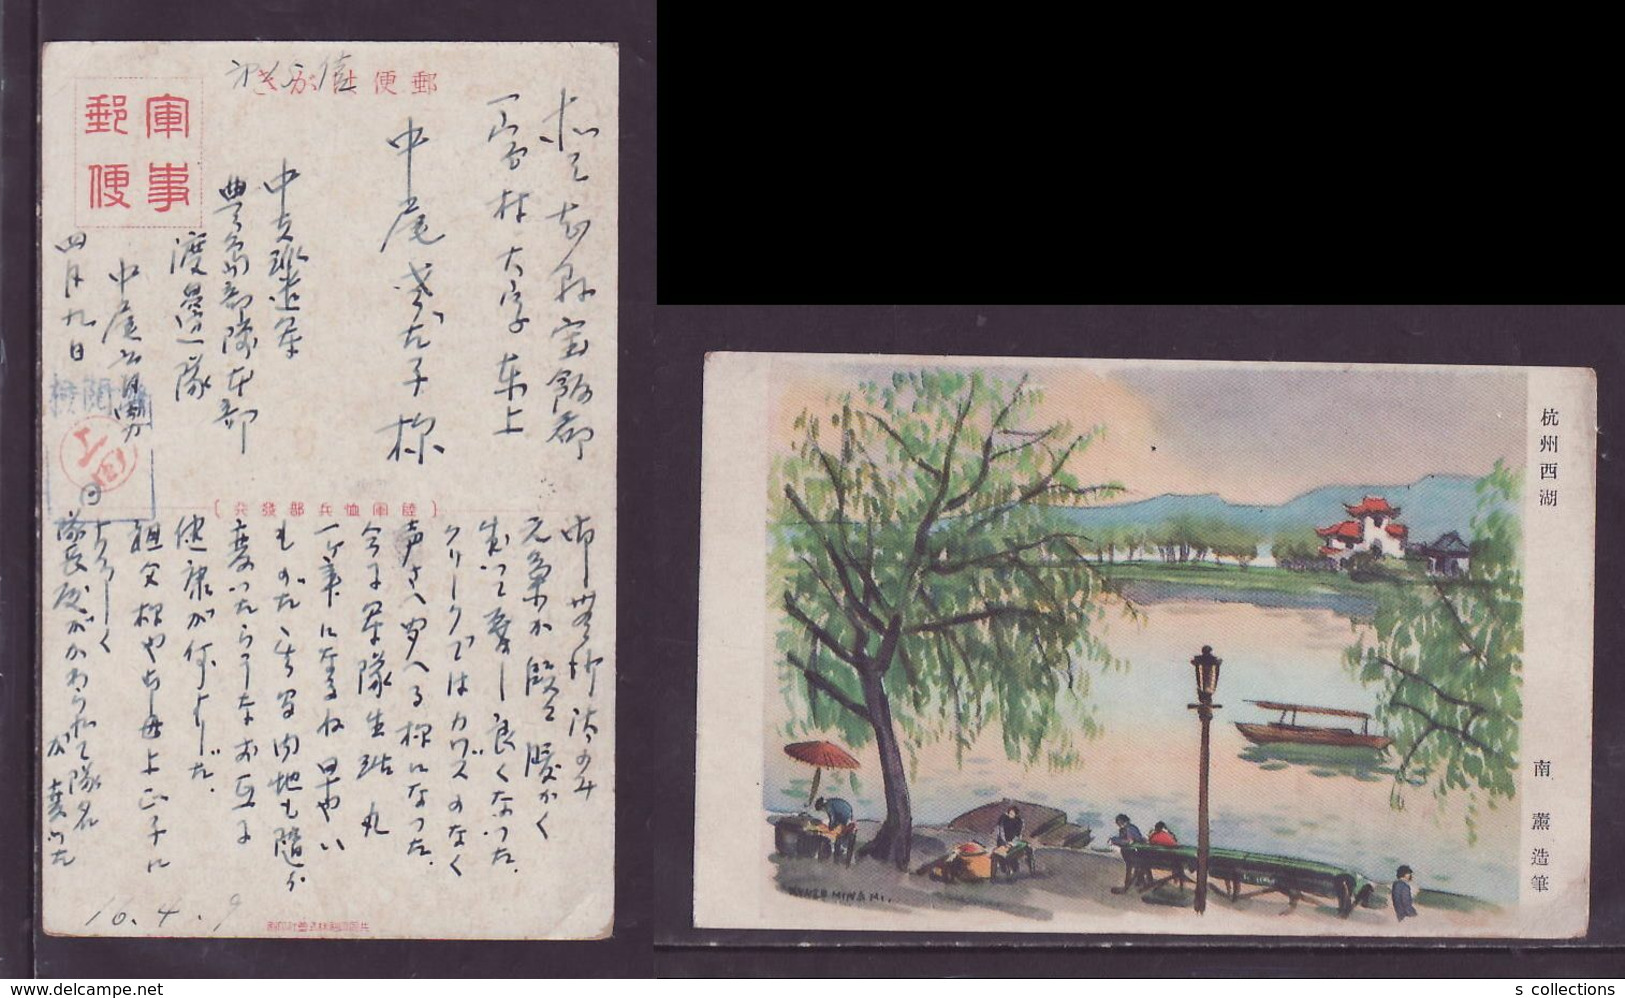 JAPAN WWII Military Hangzhou West Lake Picture Postcard Central China WW2 MANCHURIA CHINE MANDCHOUKOUO JAPON GIAPPONE - 1943-45 Shanghai & Nanchino